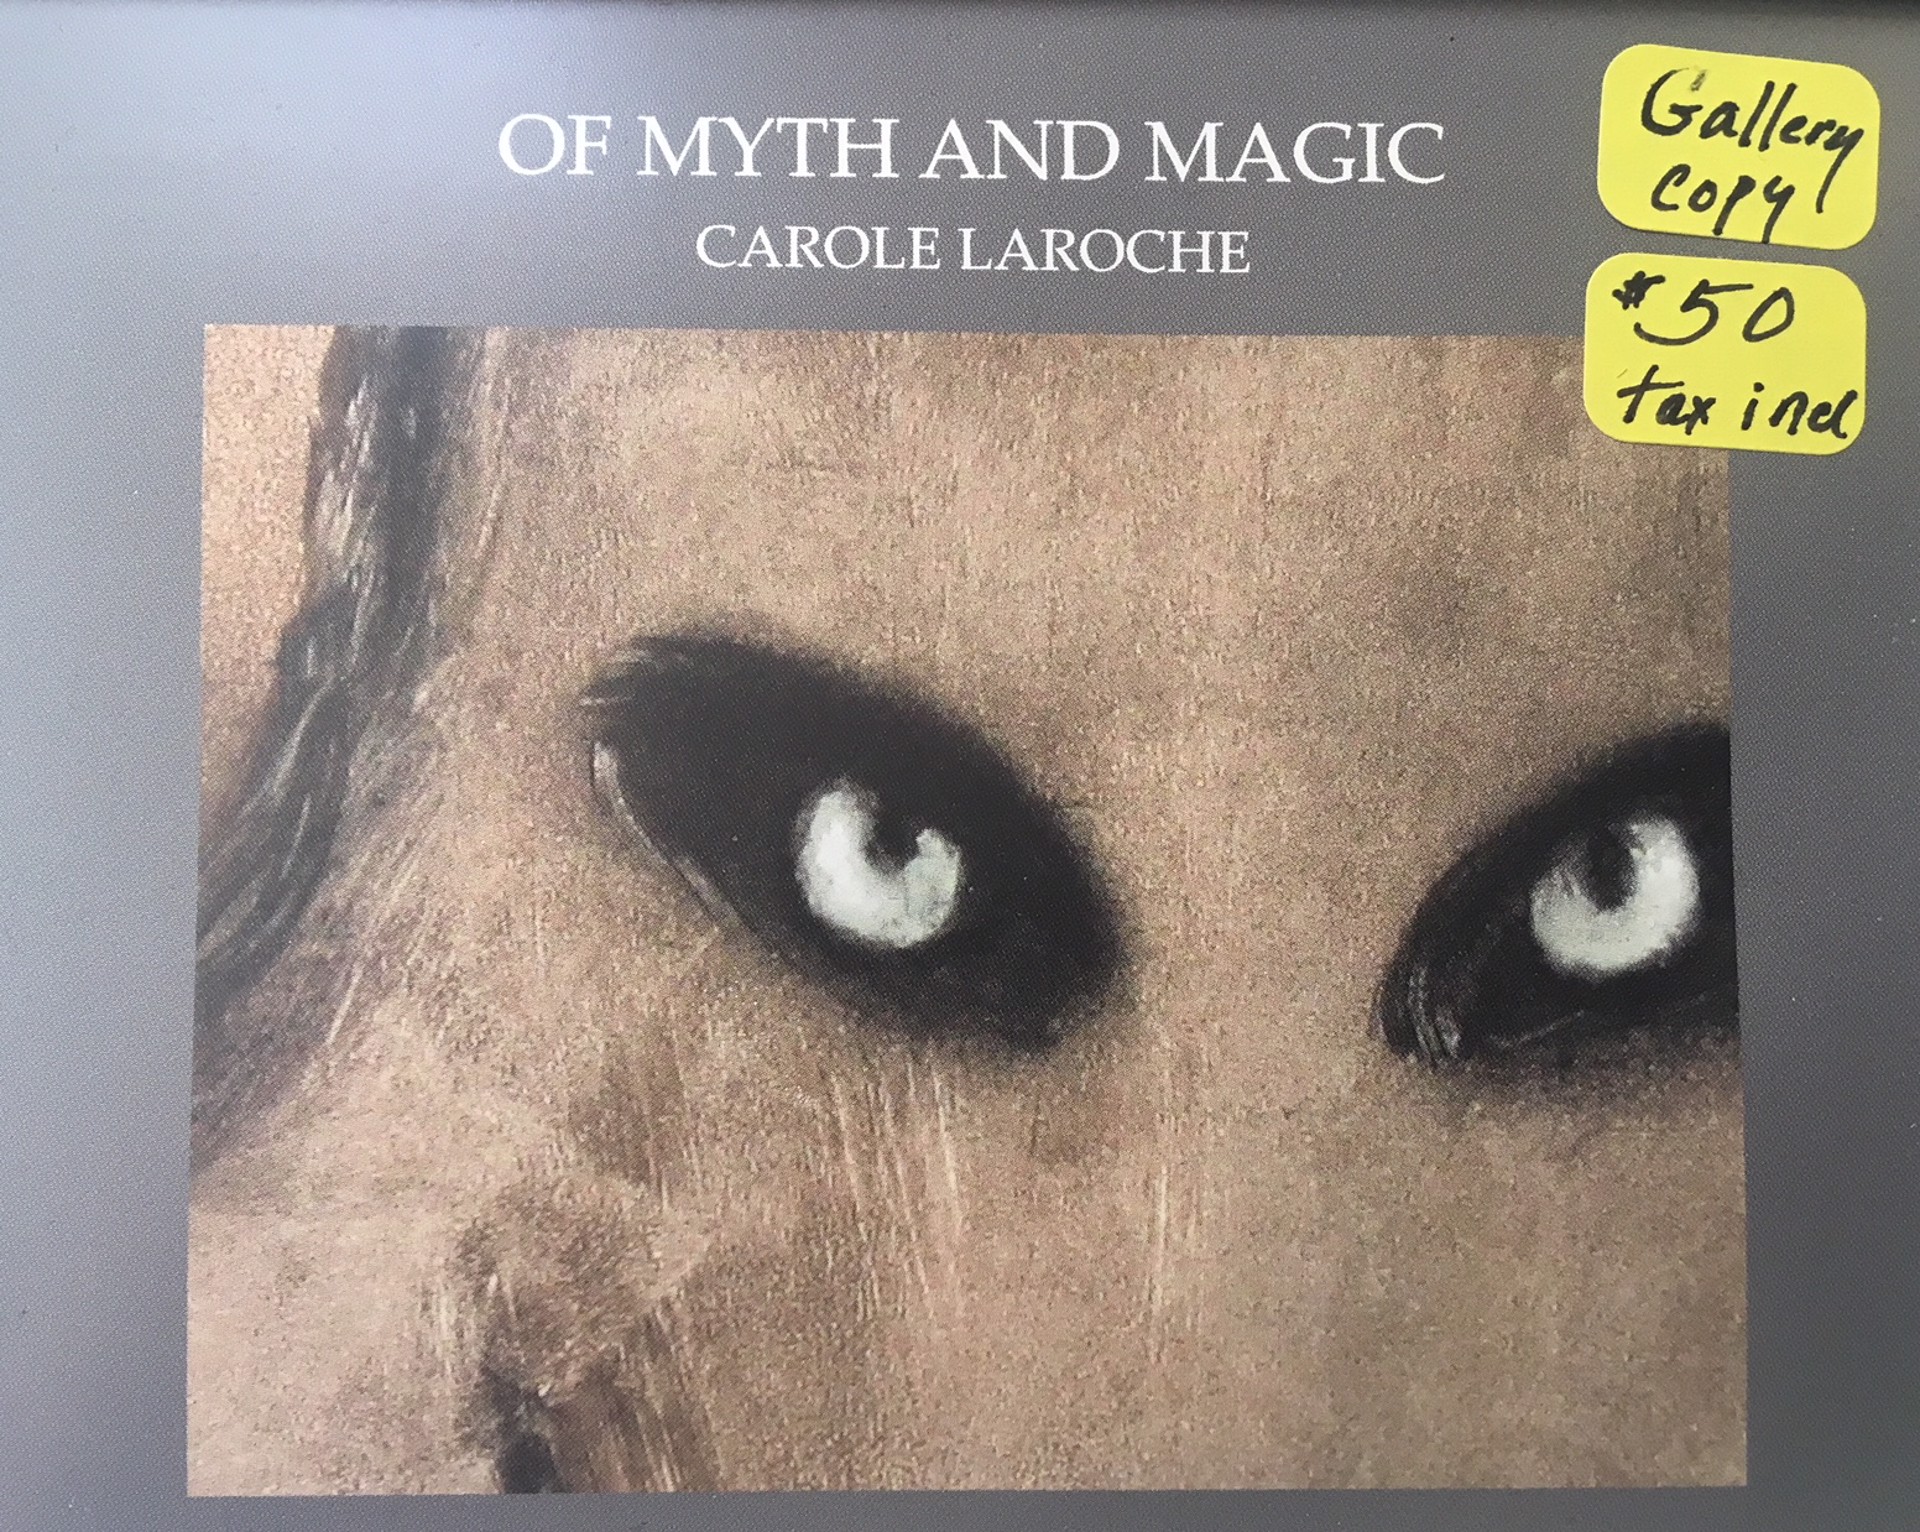 BOOK OF MYTH AND MAGIC $50  Cloth by Carole LaRoche